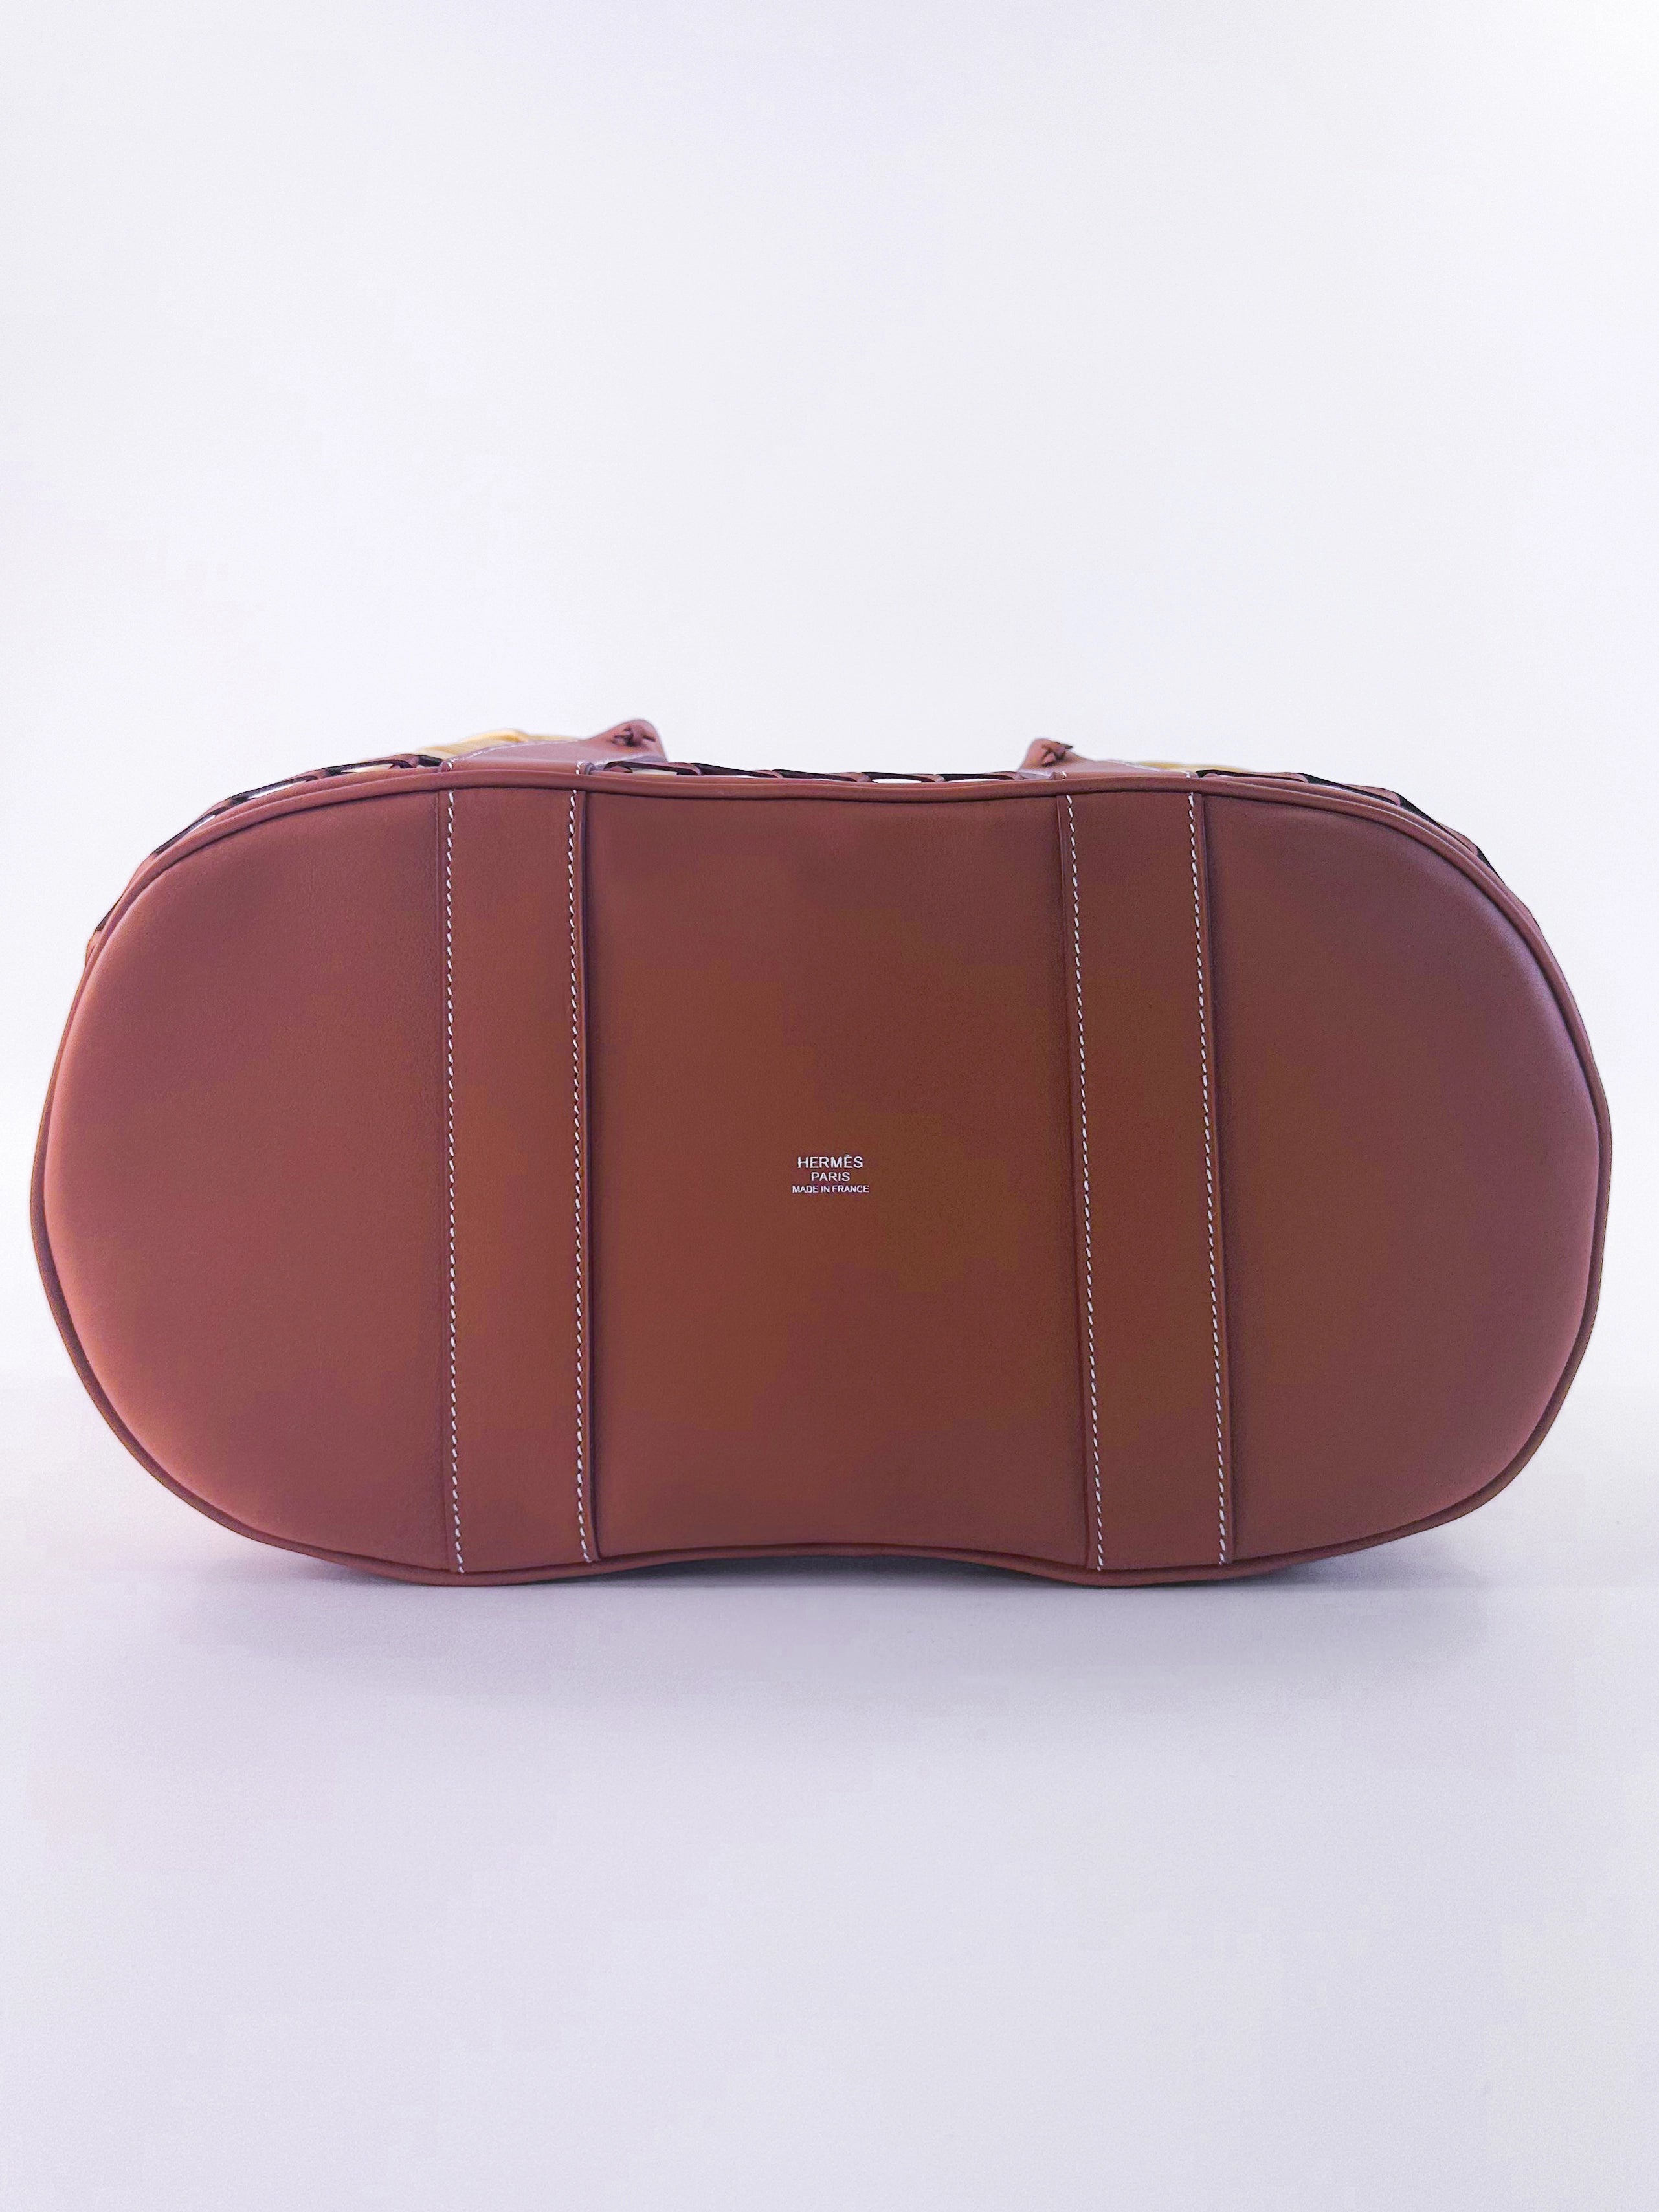 brown leather hermes bag